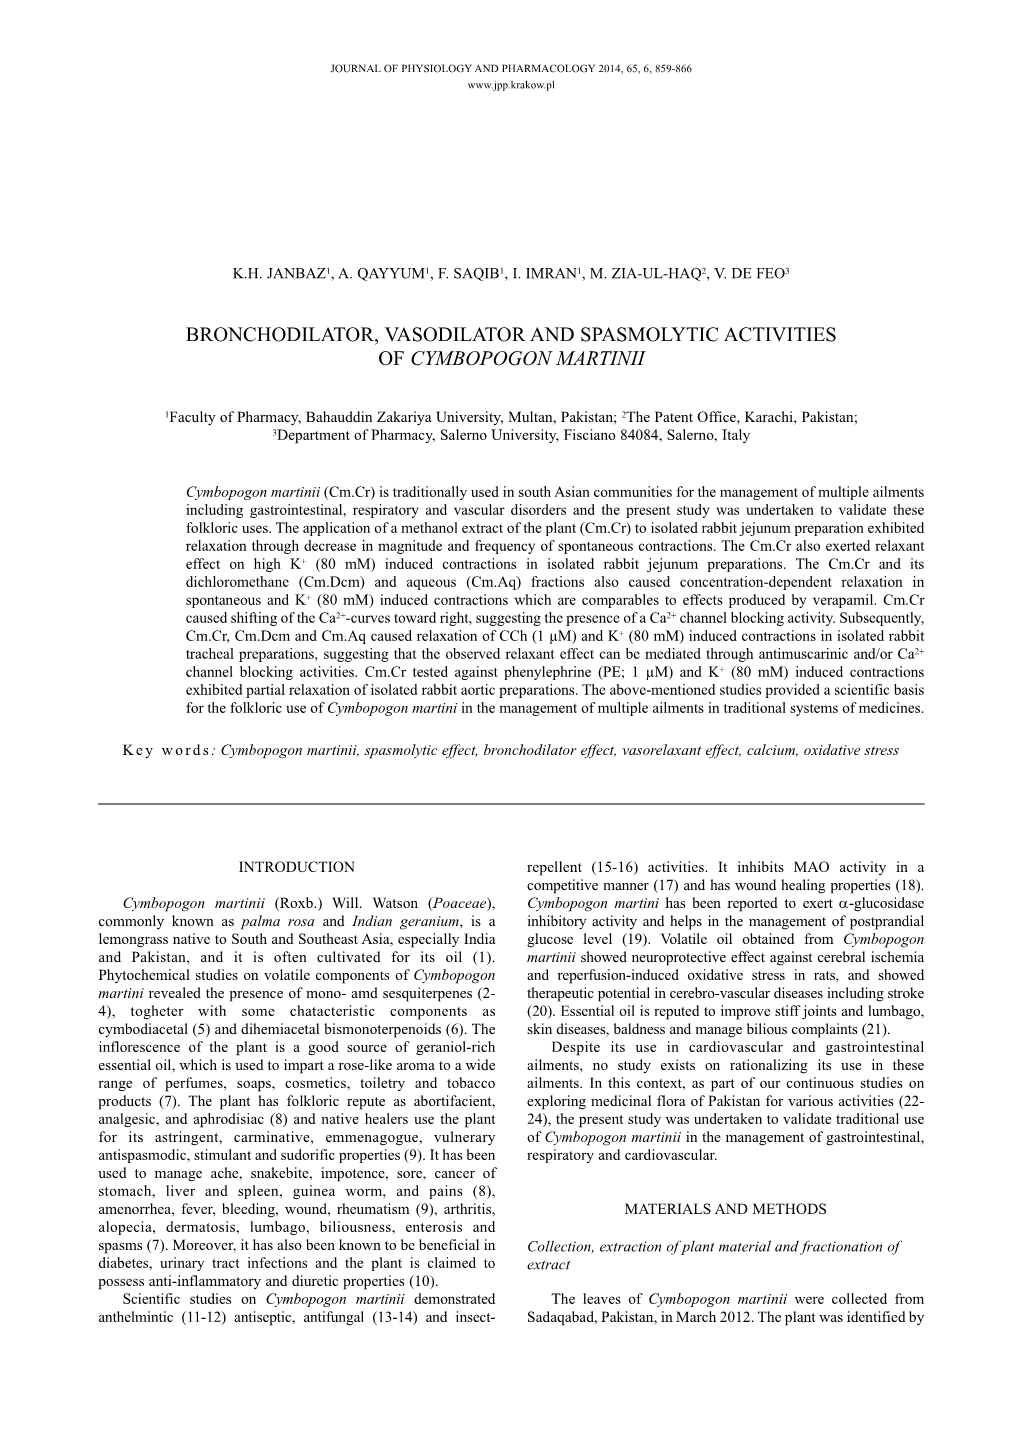 Bronchodilator, Vasodilator and Spasmolytic Activities of Cymbopogon Martinii